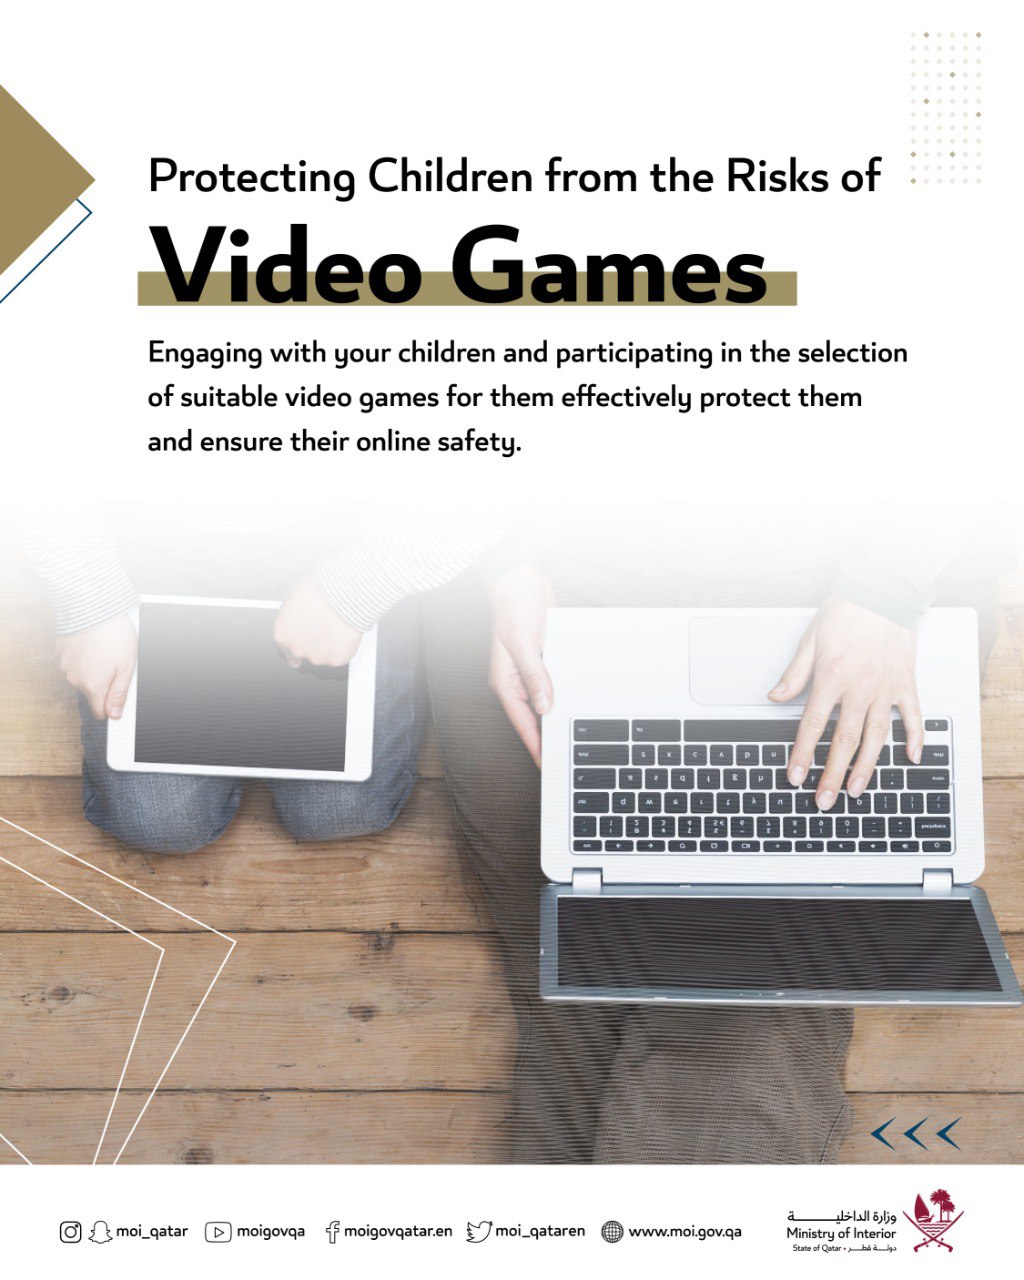 Online Gaming Risks & Game Security